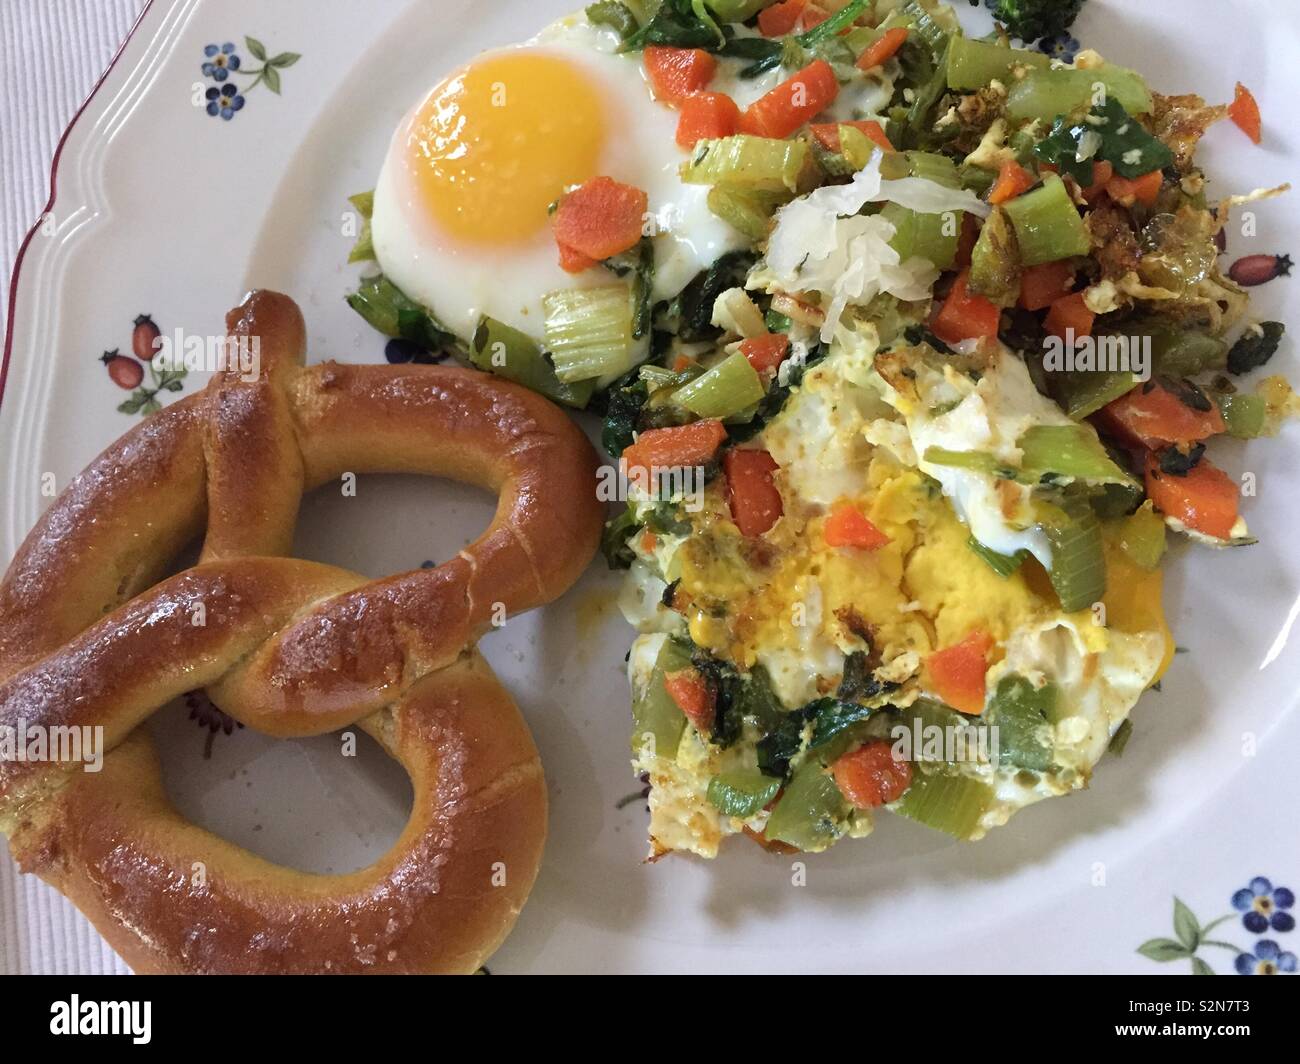 Soft pretzel and eggs with veggies Stock Photo